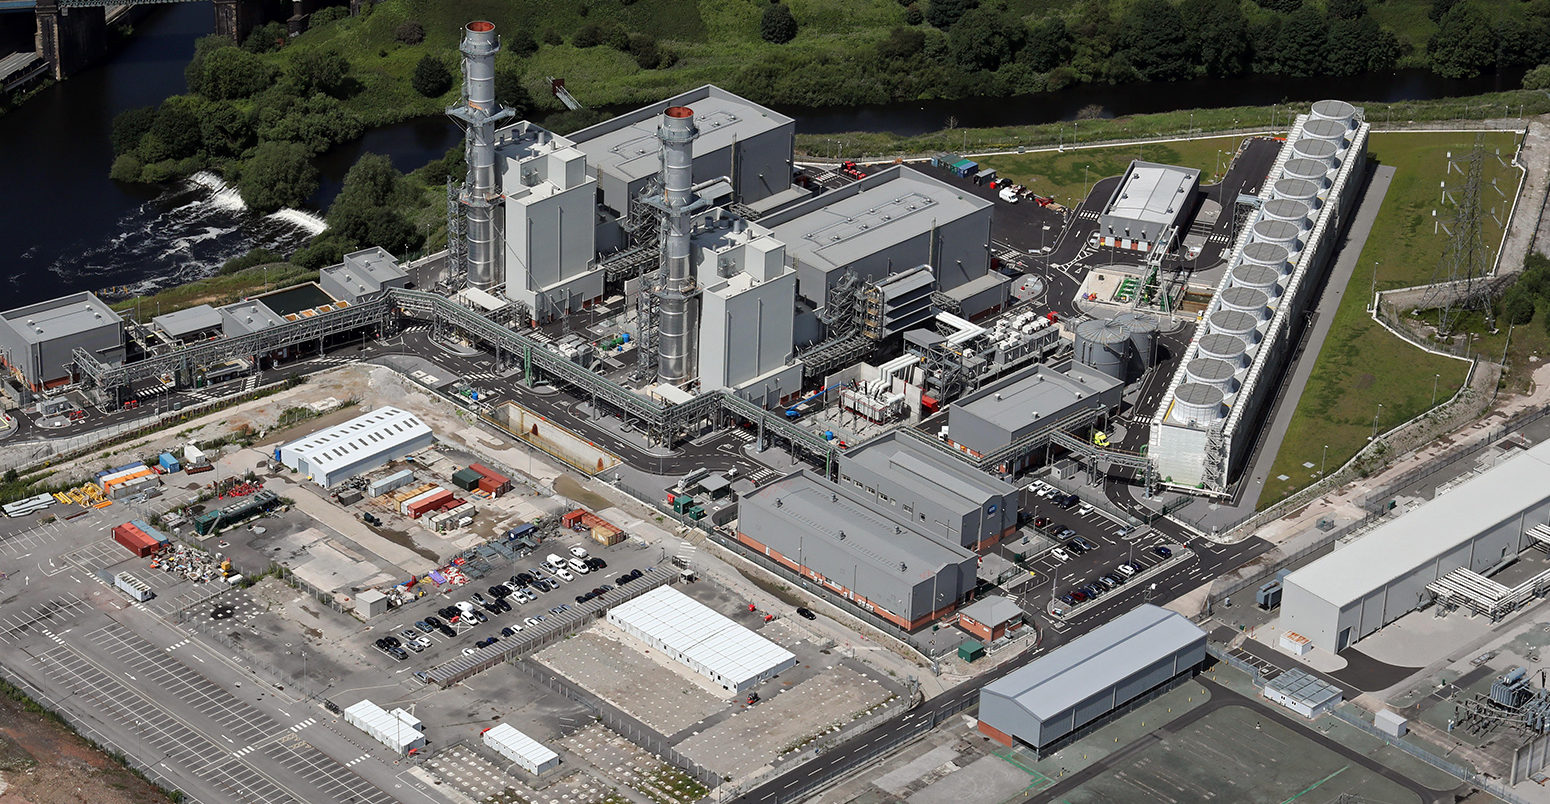 JJ94BK aerial view of Carrington Power Station, Irlam, Salford, Manchester, UK